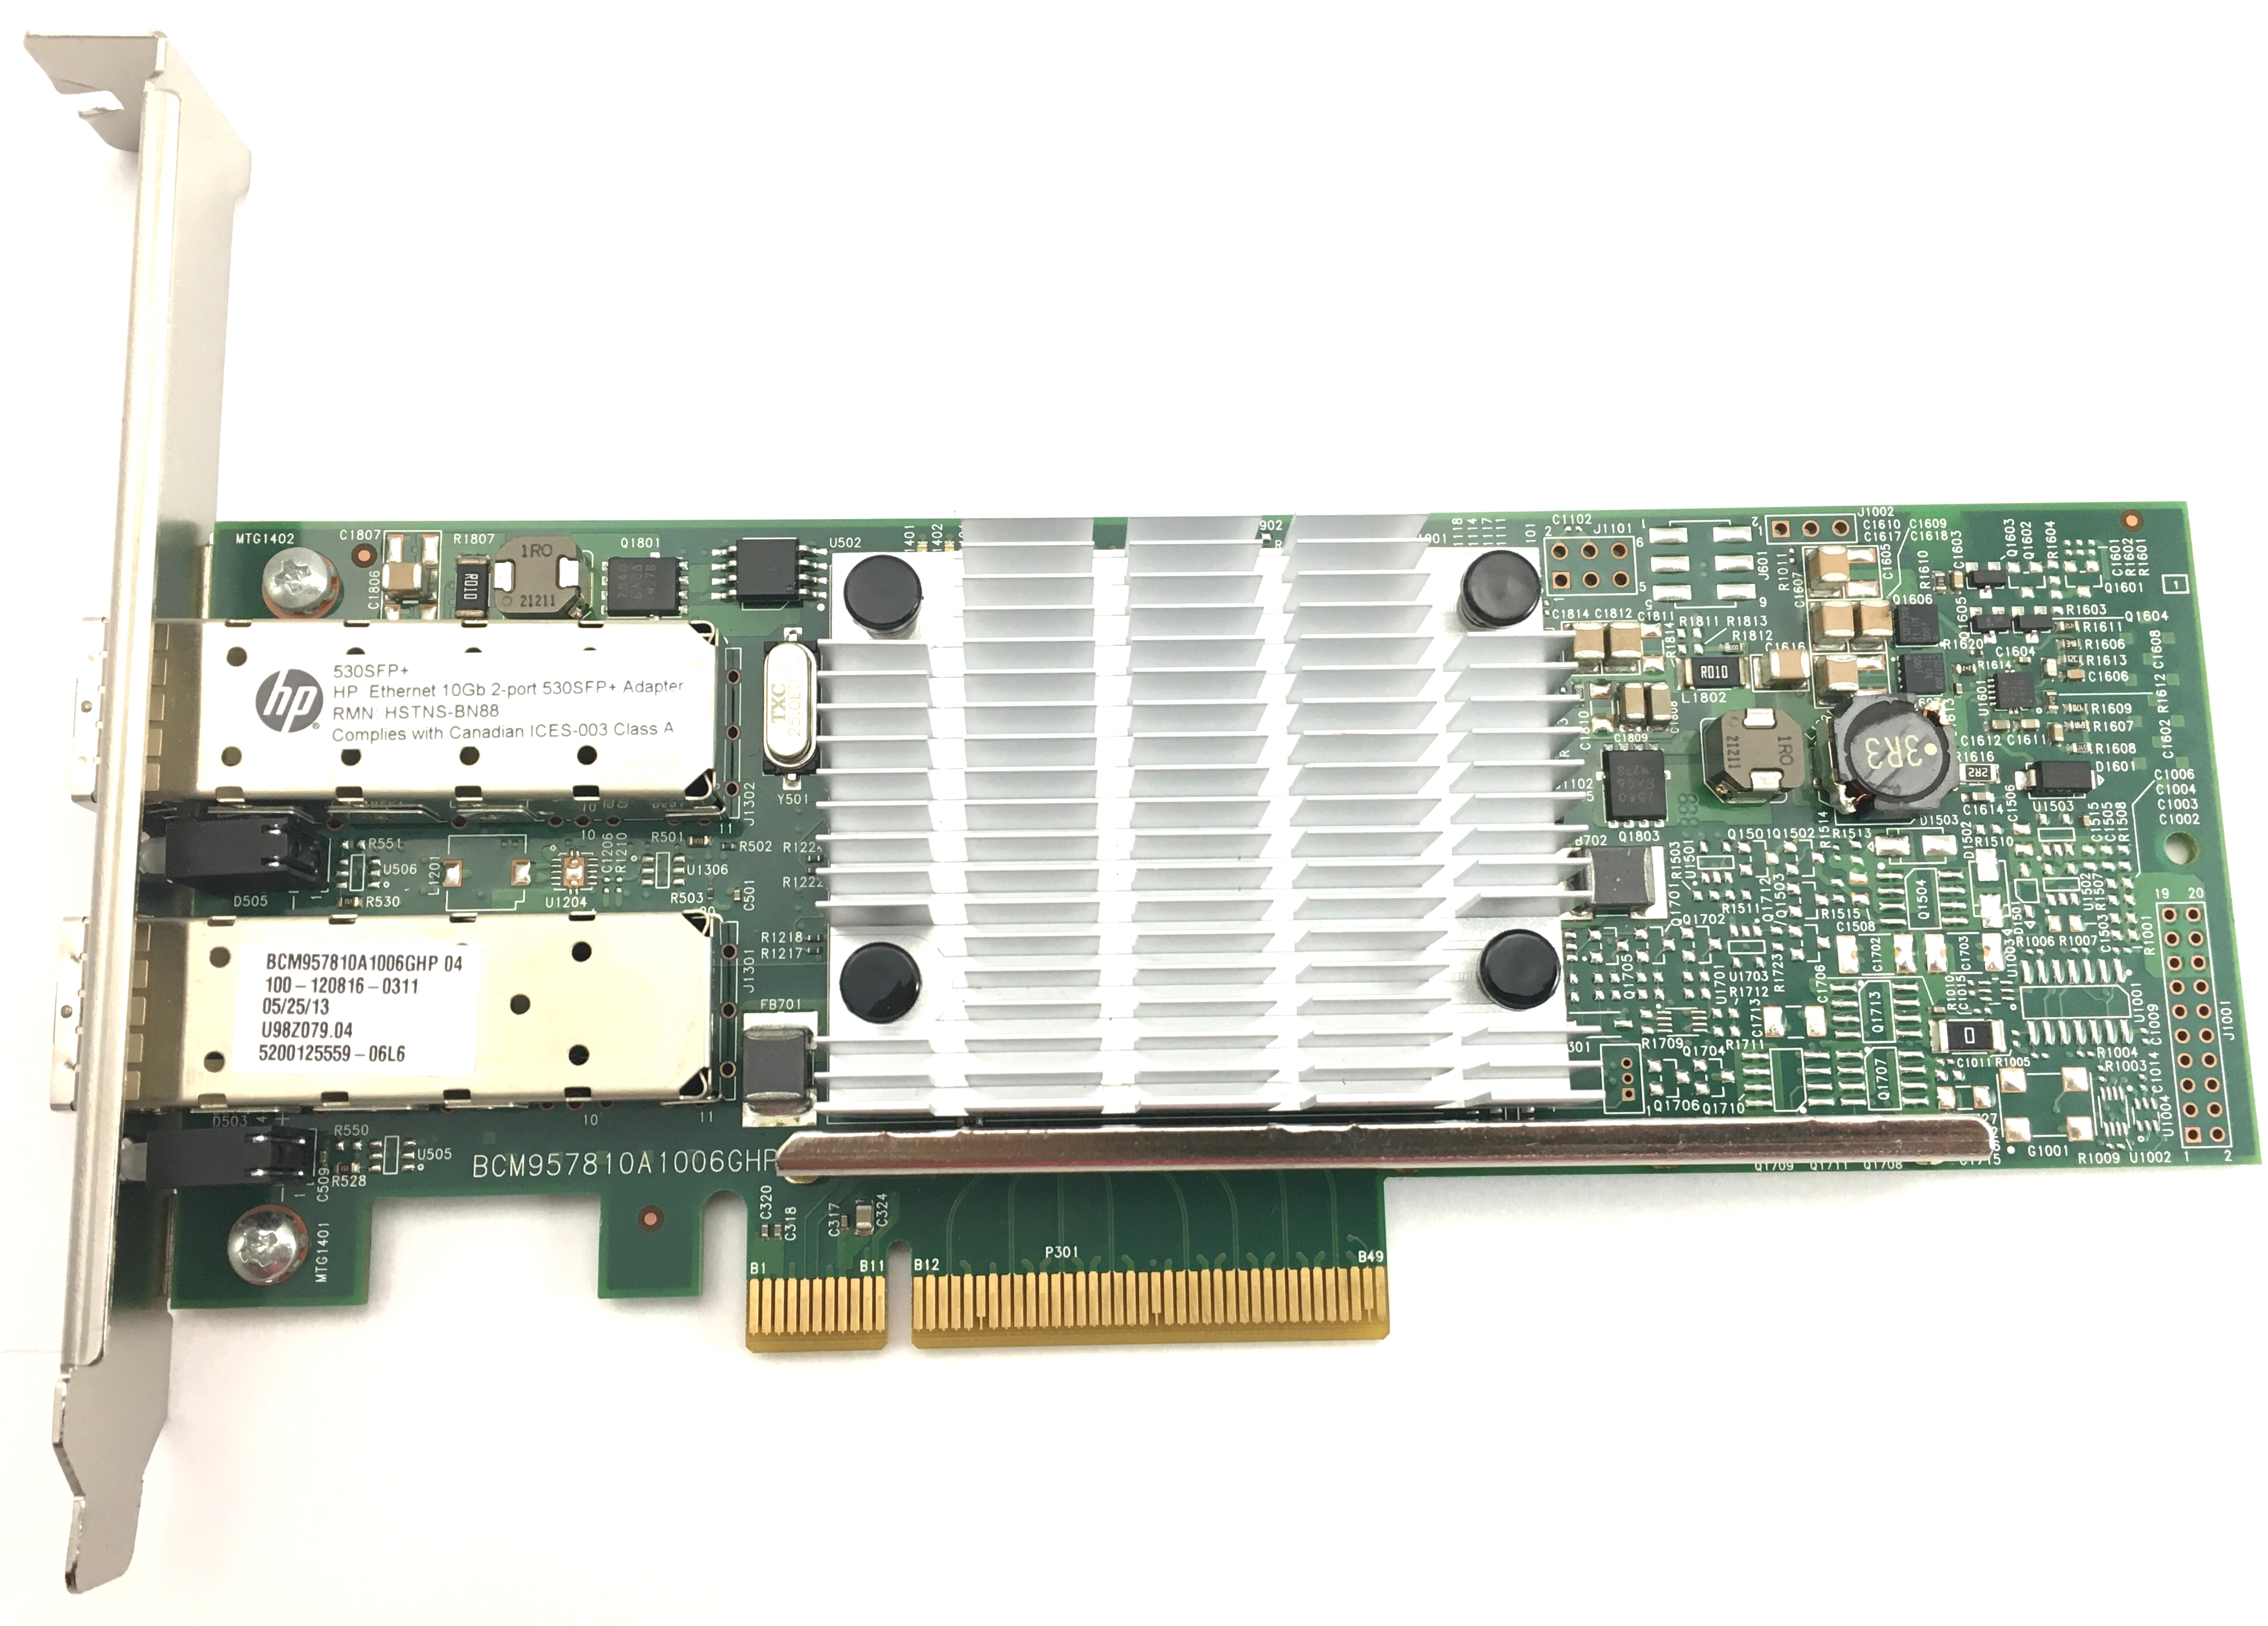 HP Ethernet 10GB 2-Port 530SFP+ Adapter Card (656244-001)